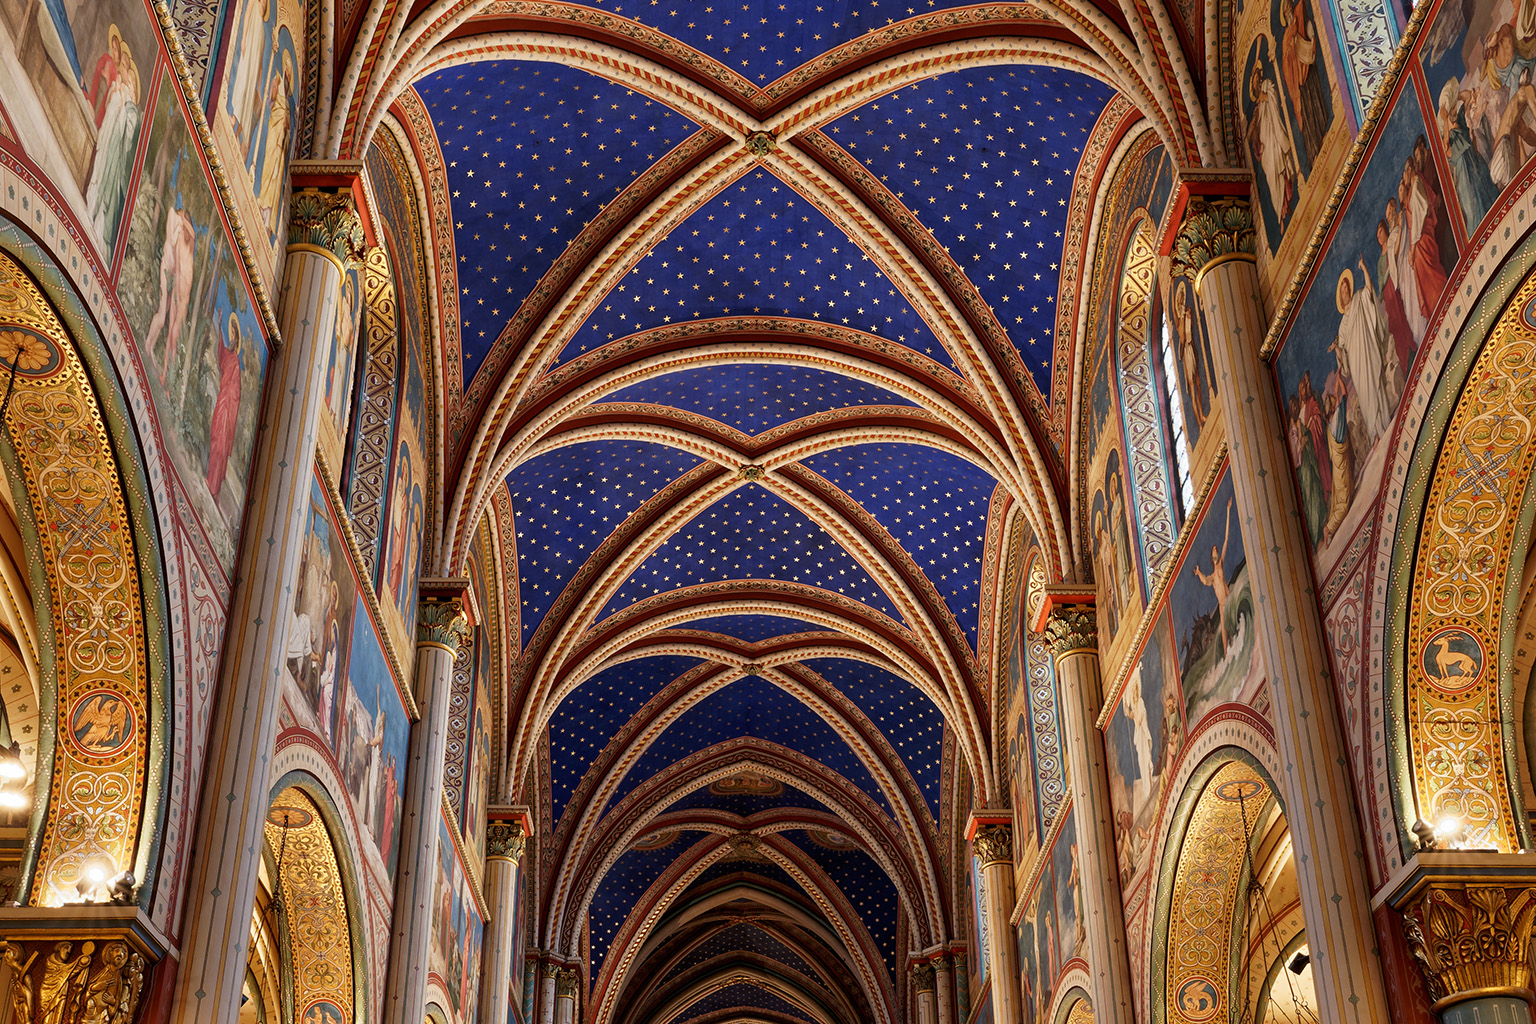 l'eglise-saint-germain-des-pres-church-©thibault1-flickr